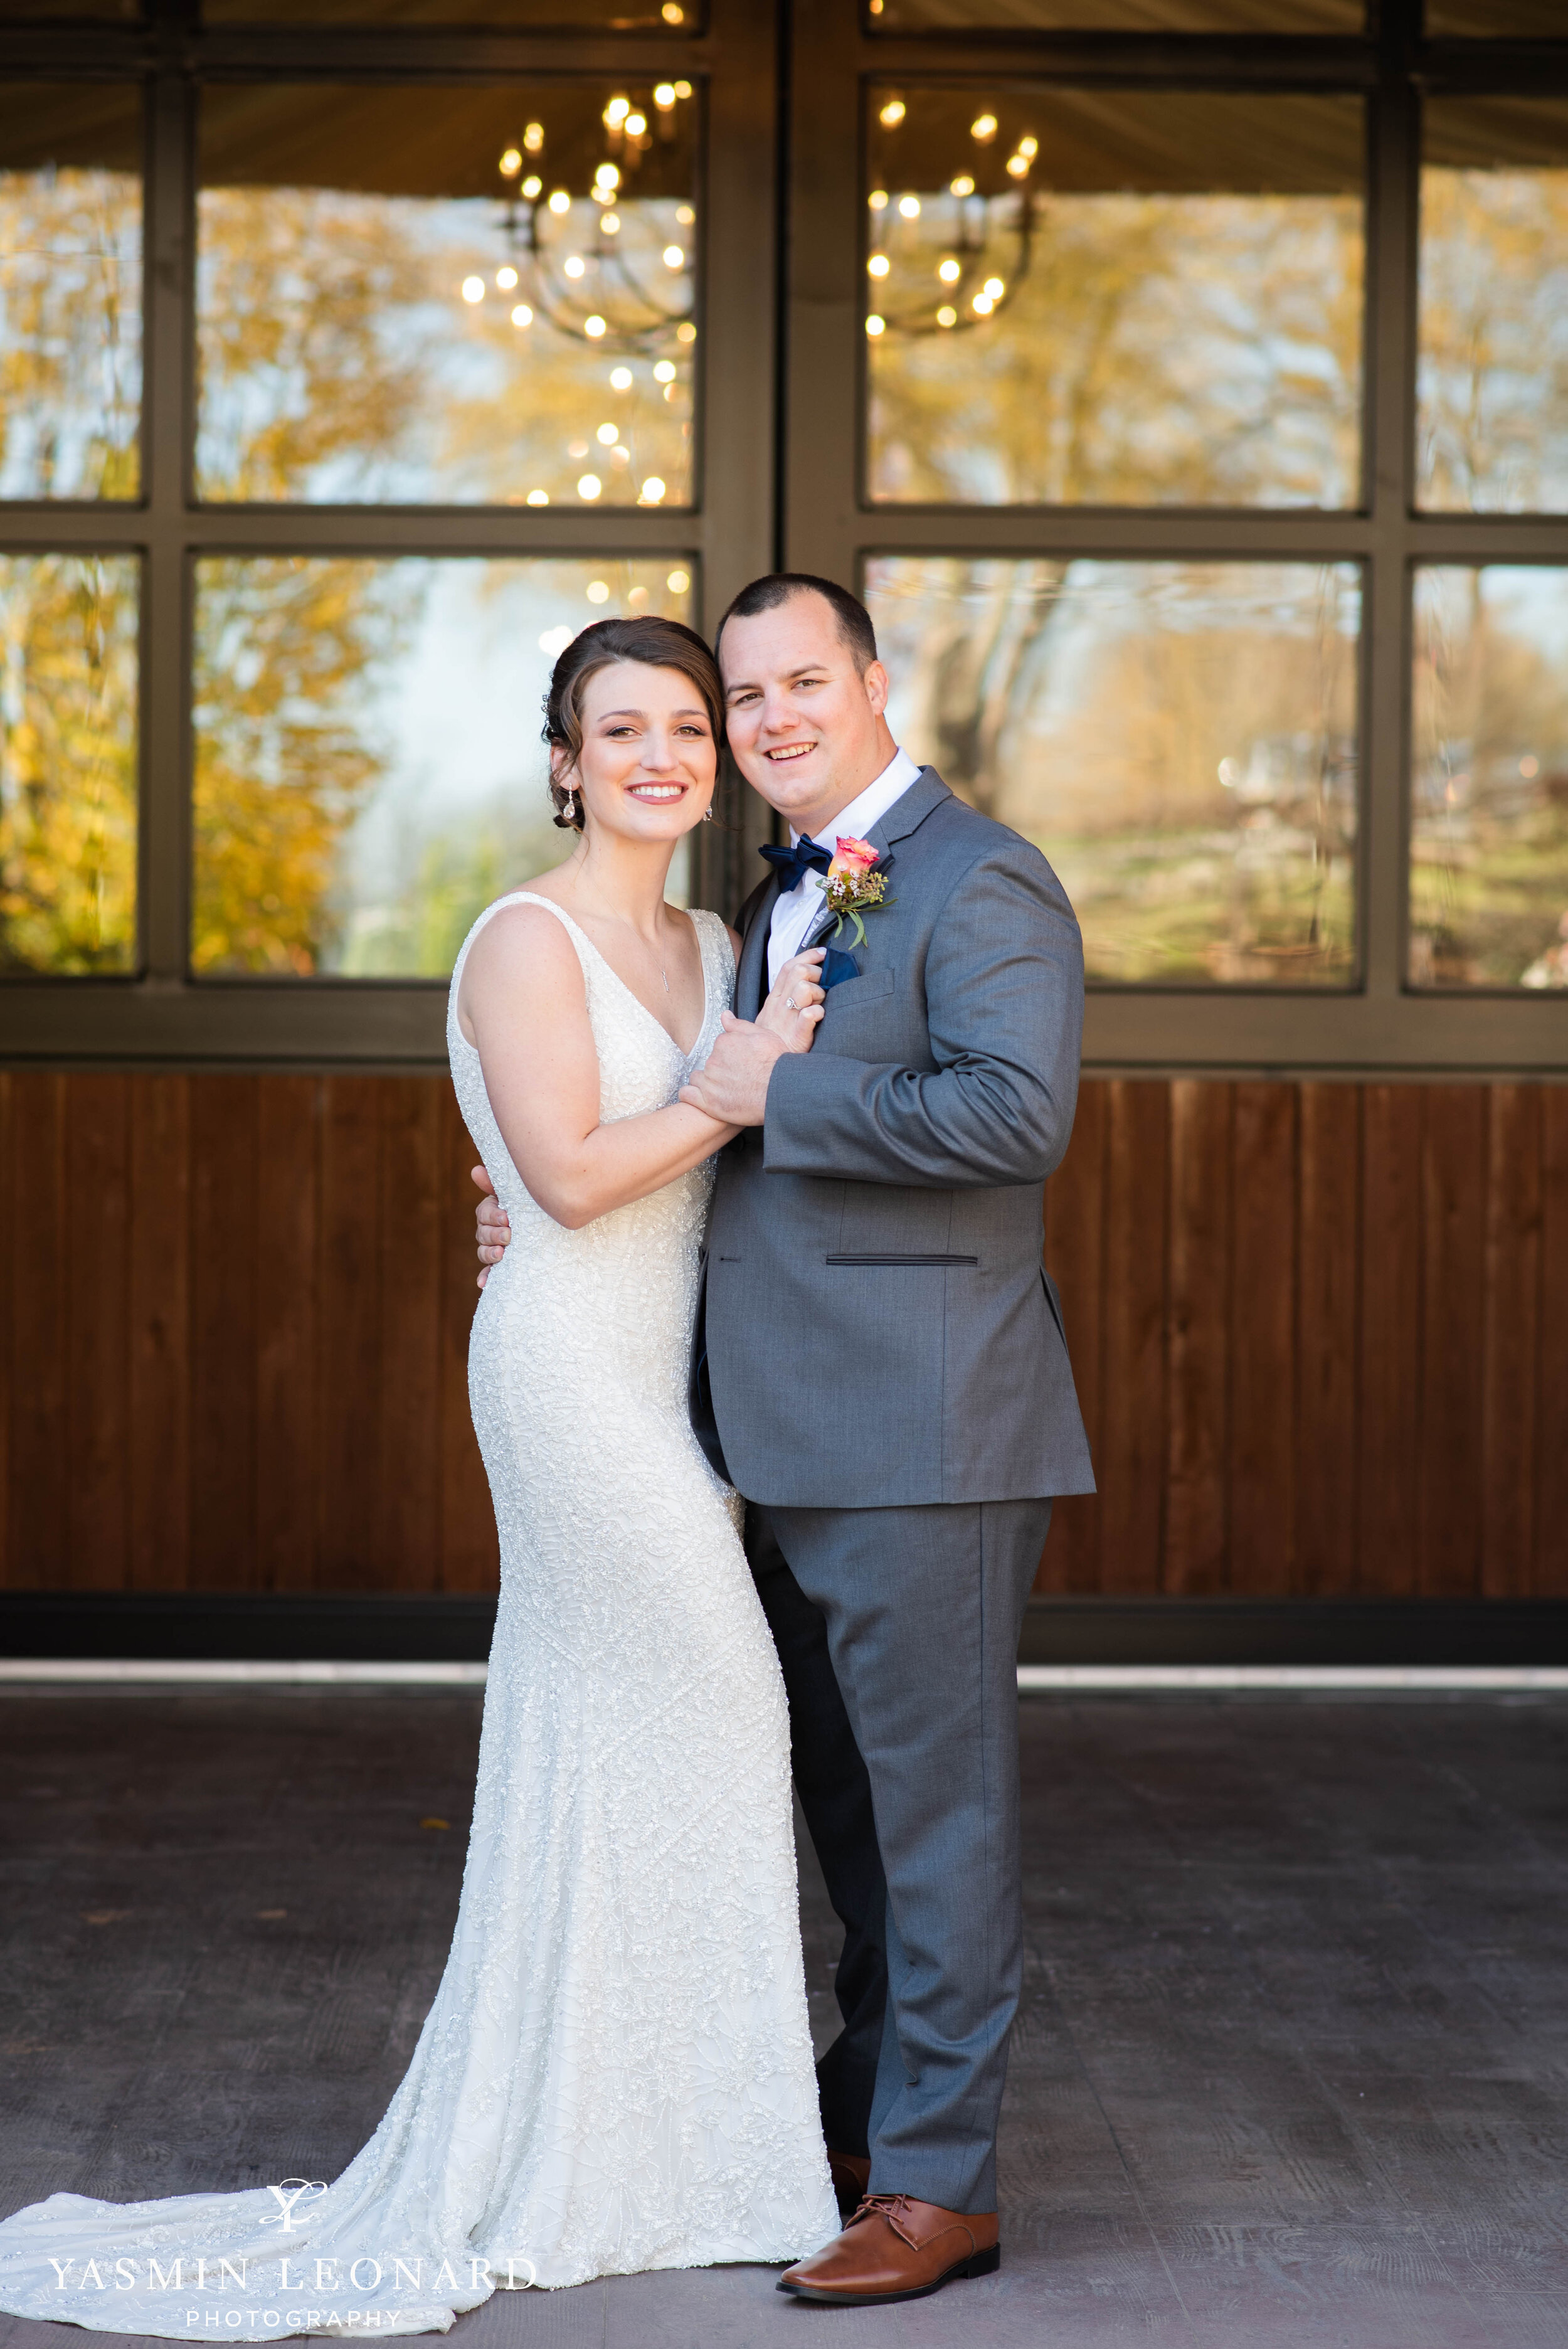 Jared and Katy - Adaumont Farms - High Point Weddings - NC Barn Weddings - Yasmin Leonard Photography-37.jpg